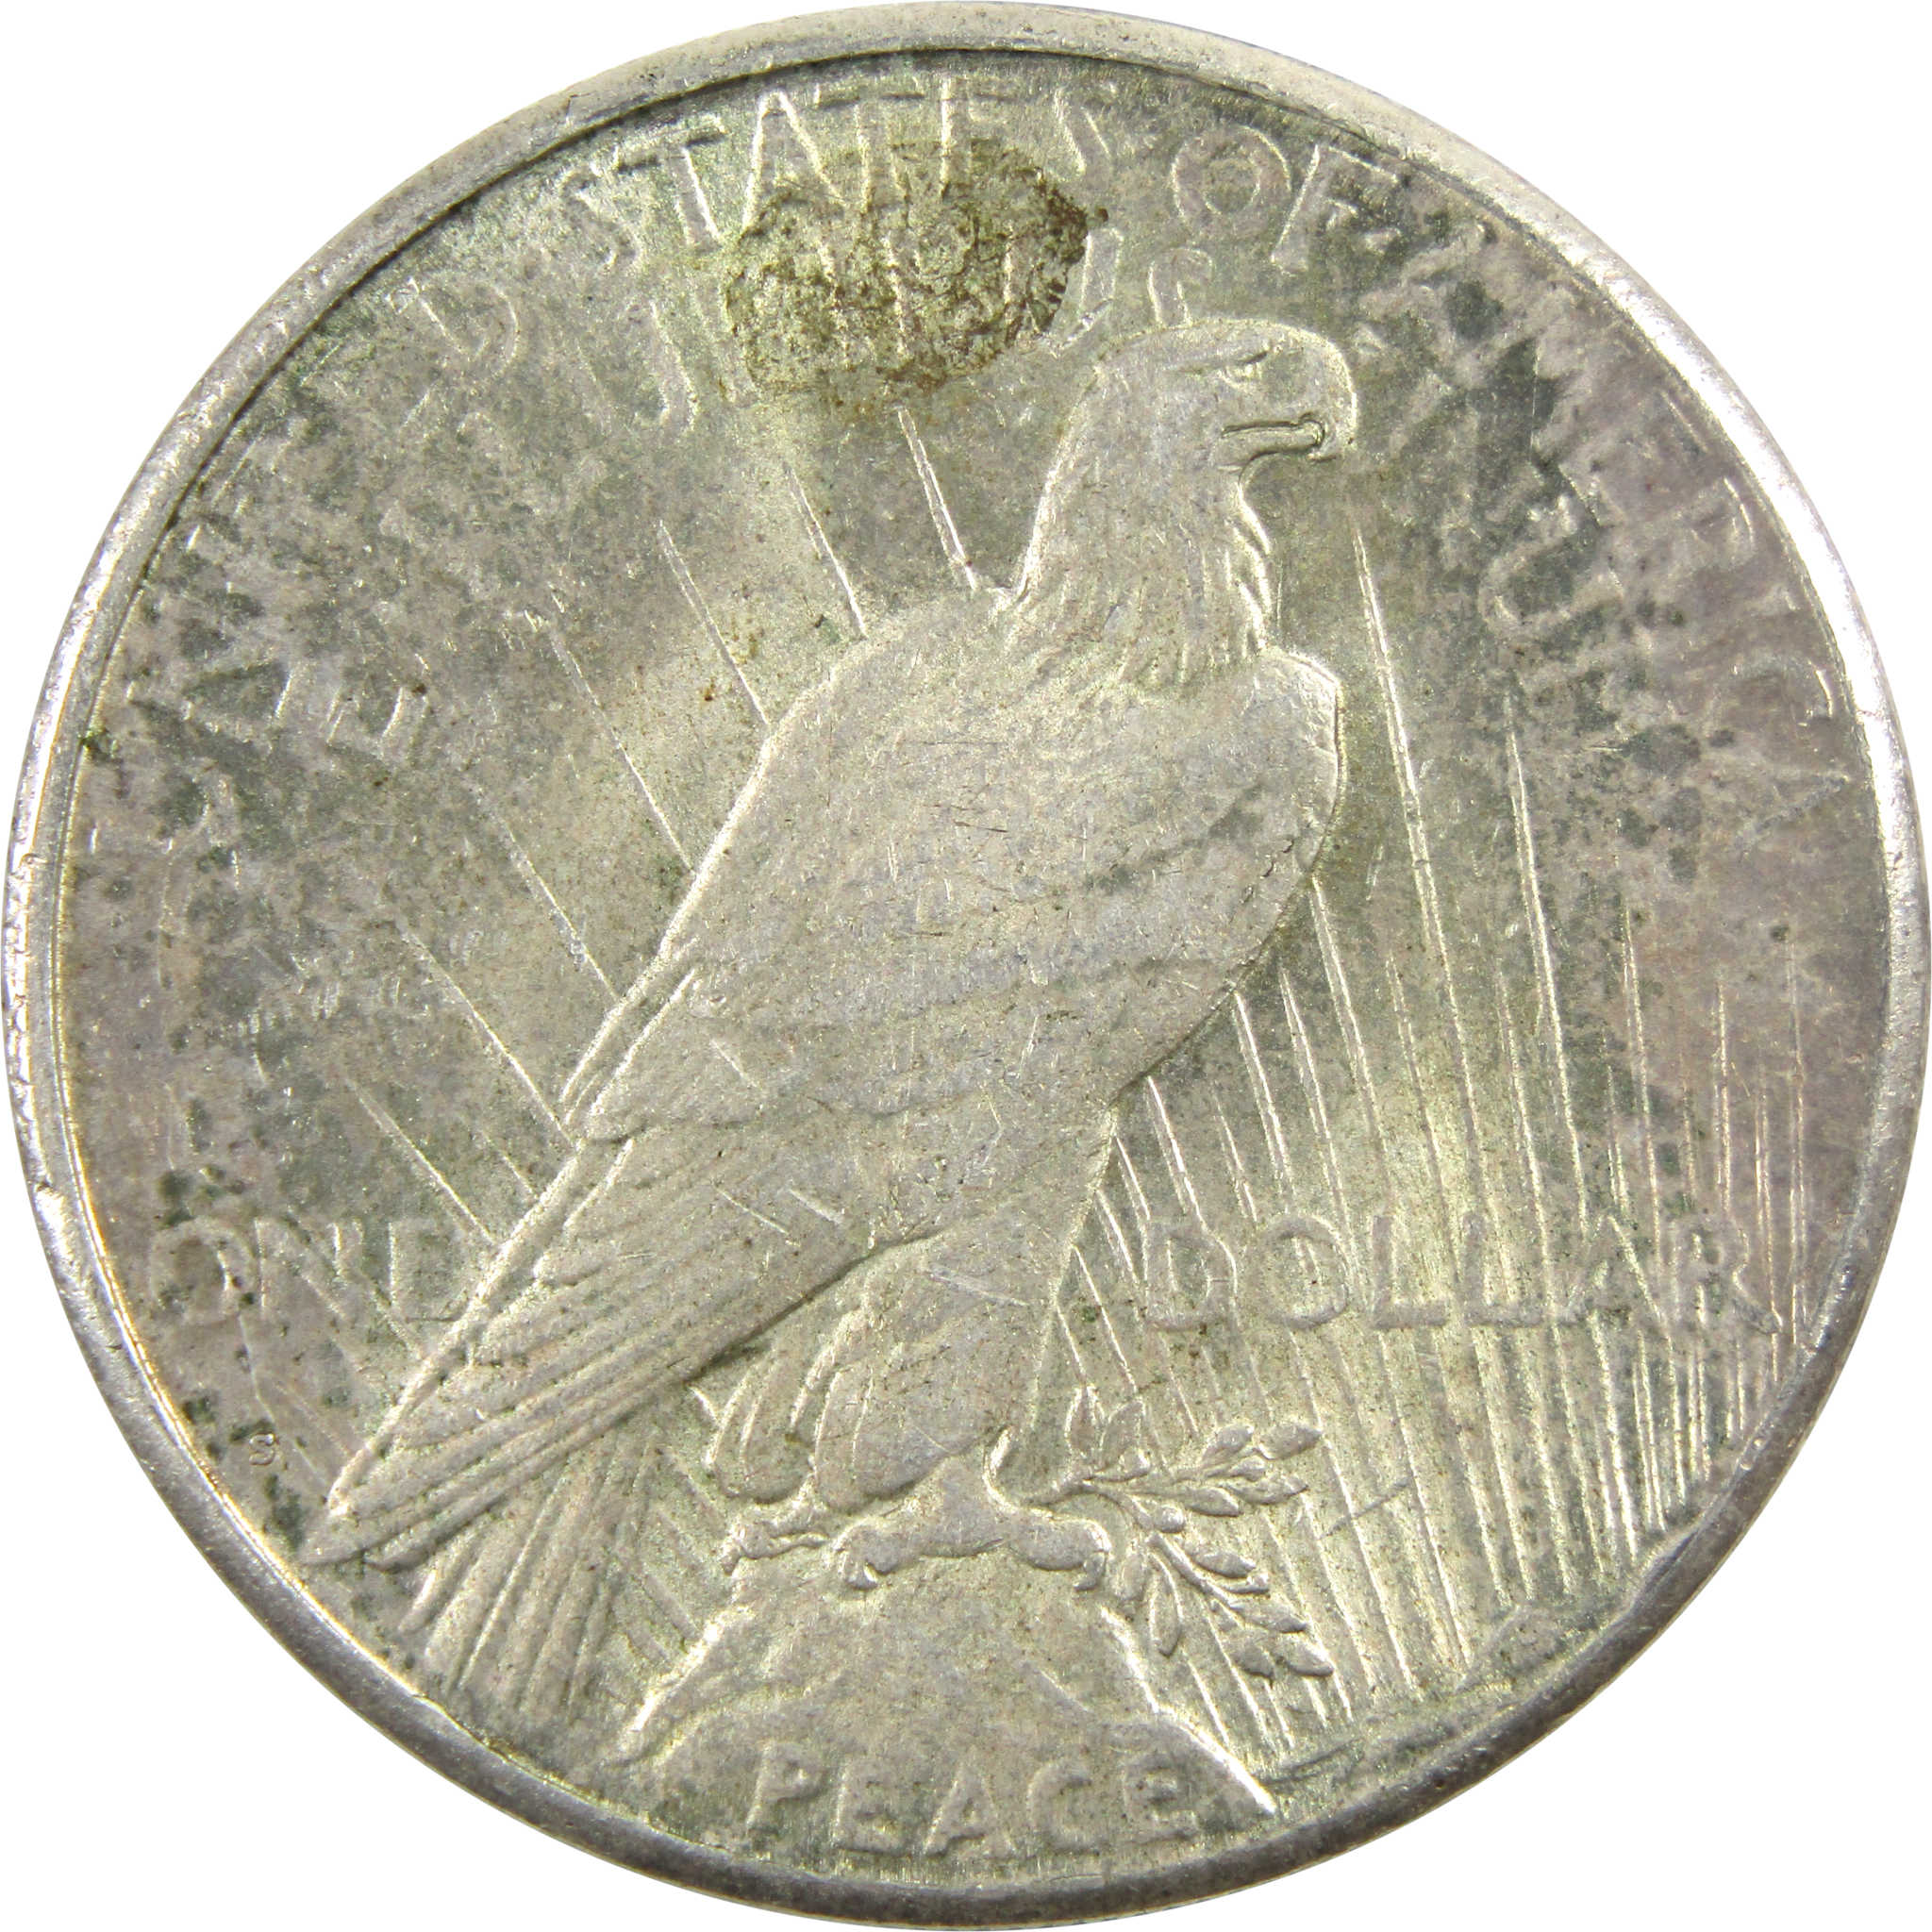 1925 S Peace Dollar Borderline Uncirculated 90% Silver $1 SKU:I5727